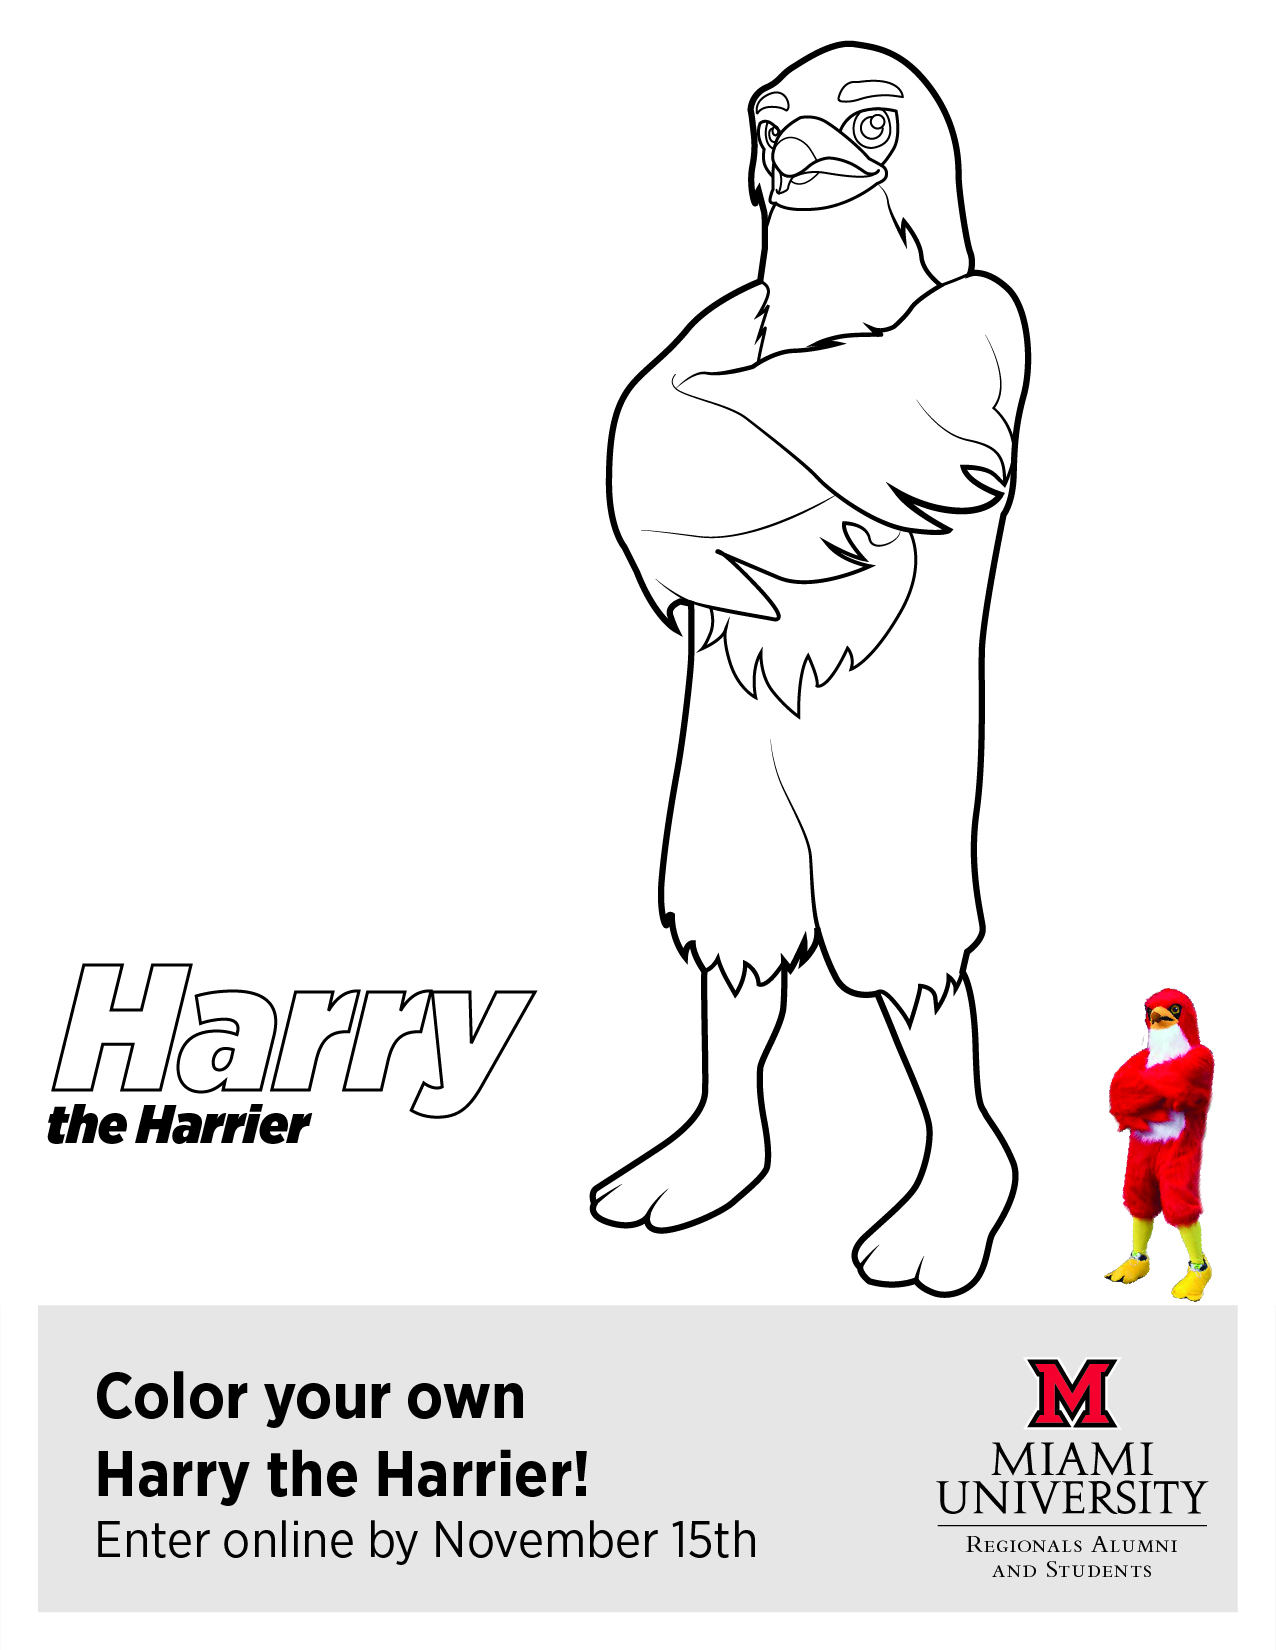 Harry the Harrier